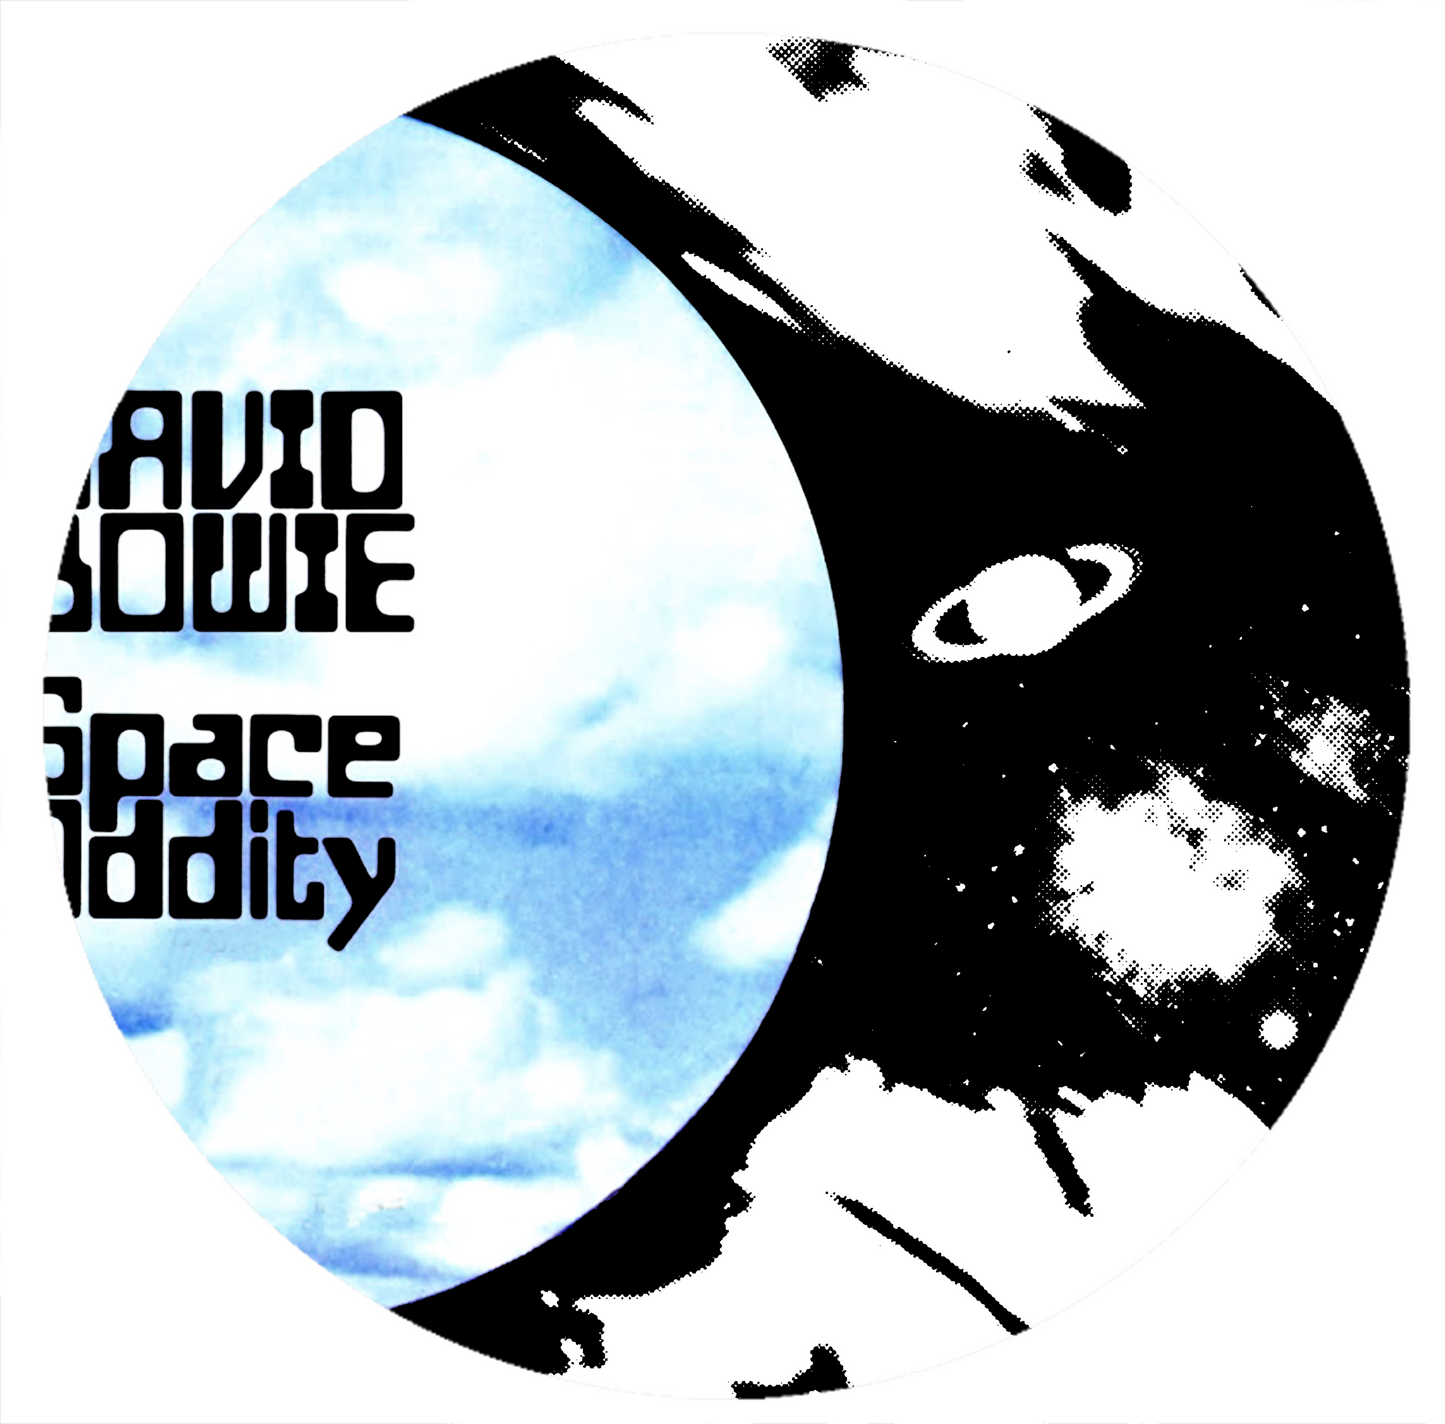 David Bowie - Space Oddity - 1969 - White Shirt